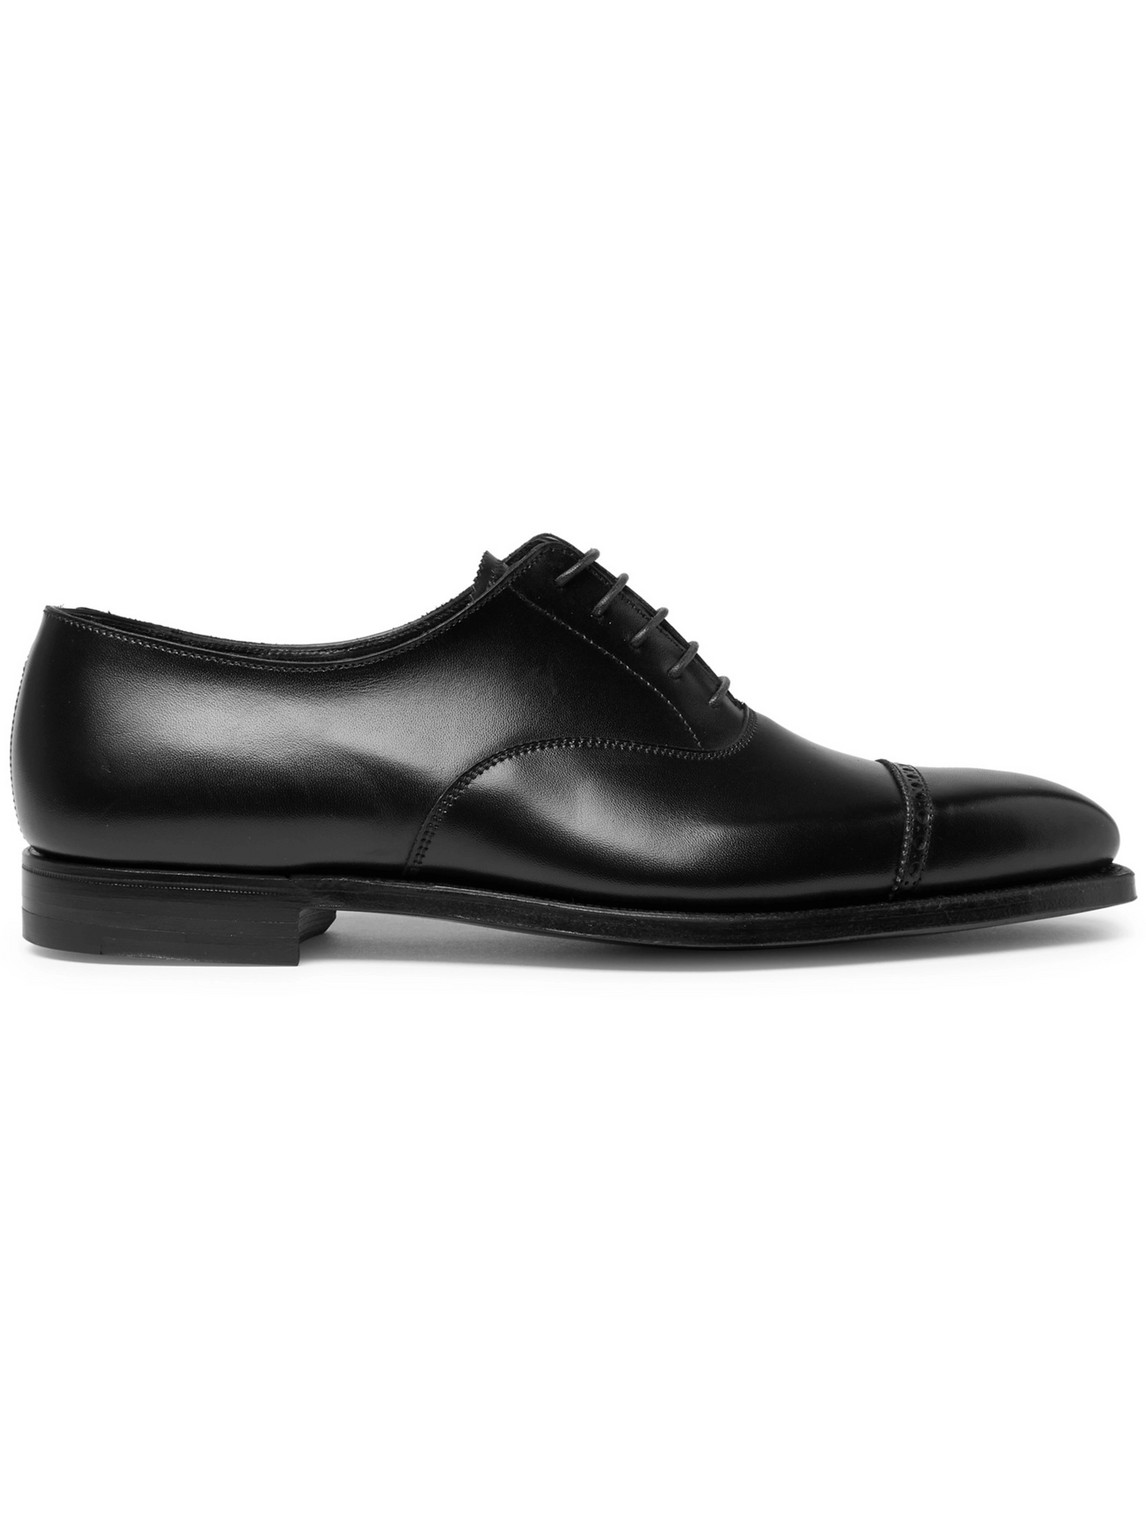 George Cleverley - Merlin Leather Oxford Shoes - Men - Black - UK 7 for Men